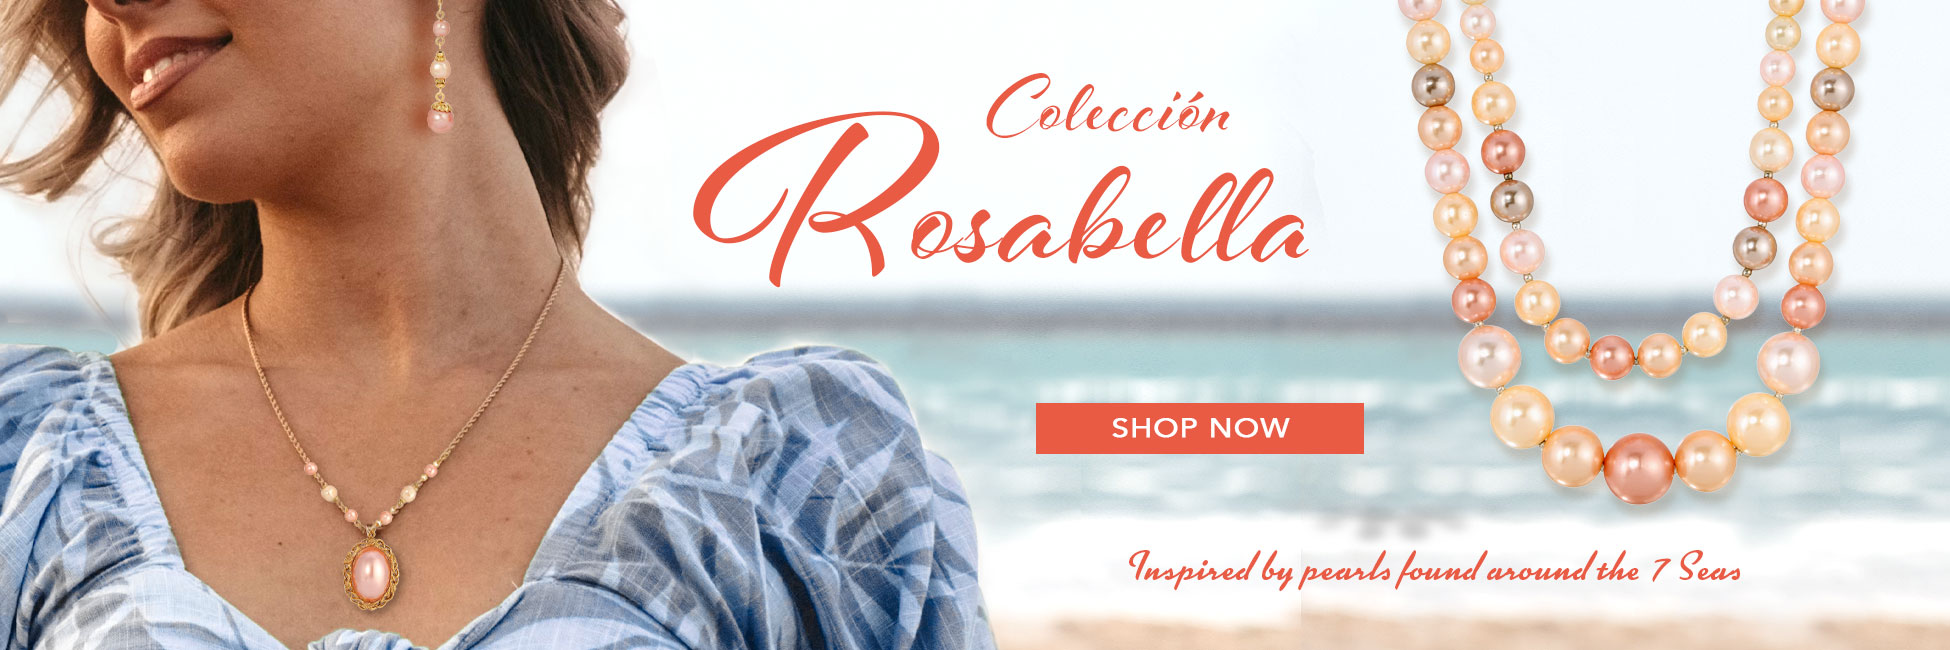 rosabella-Banner2-1920x600-1.jpg